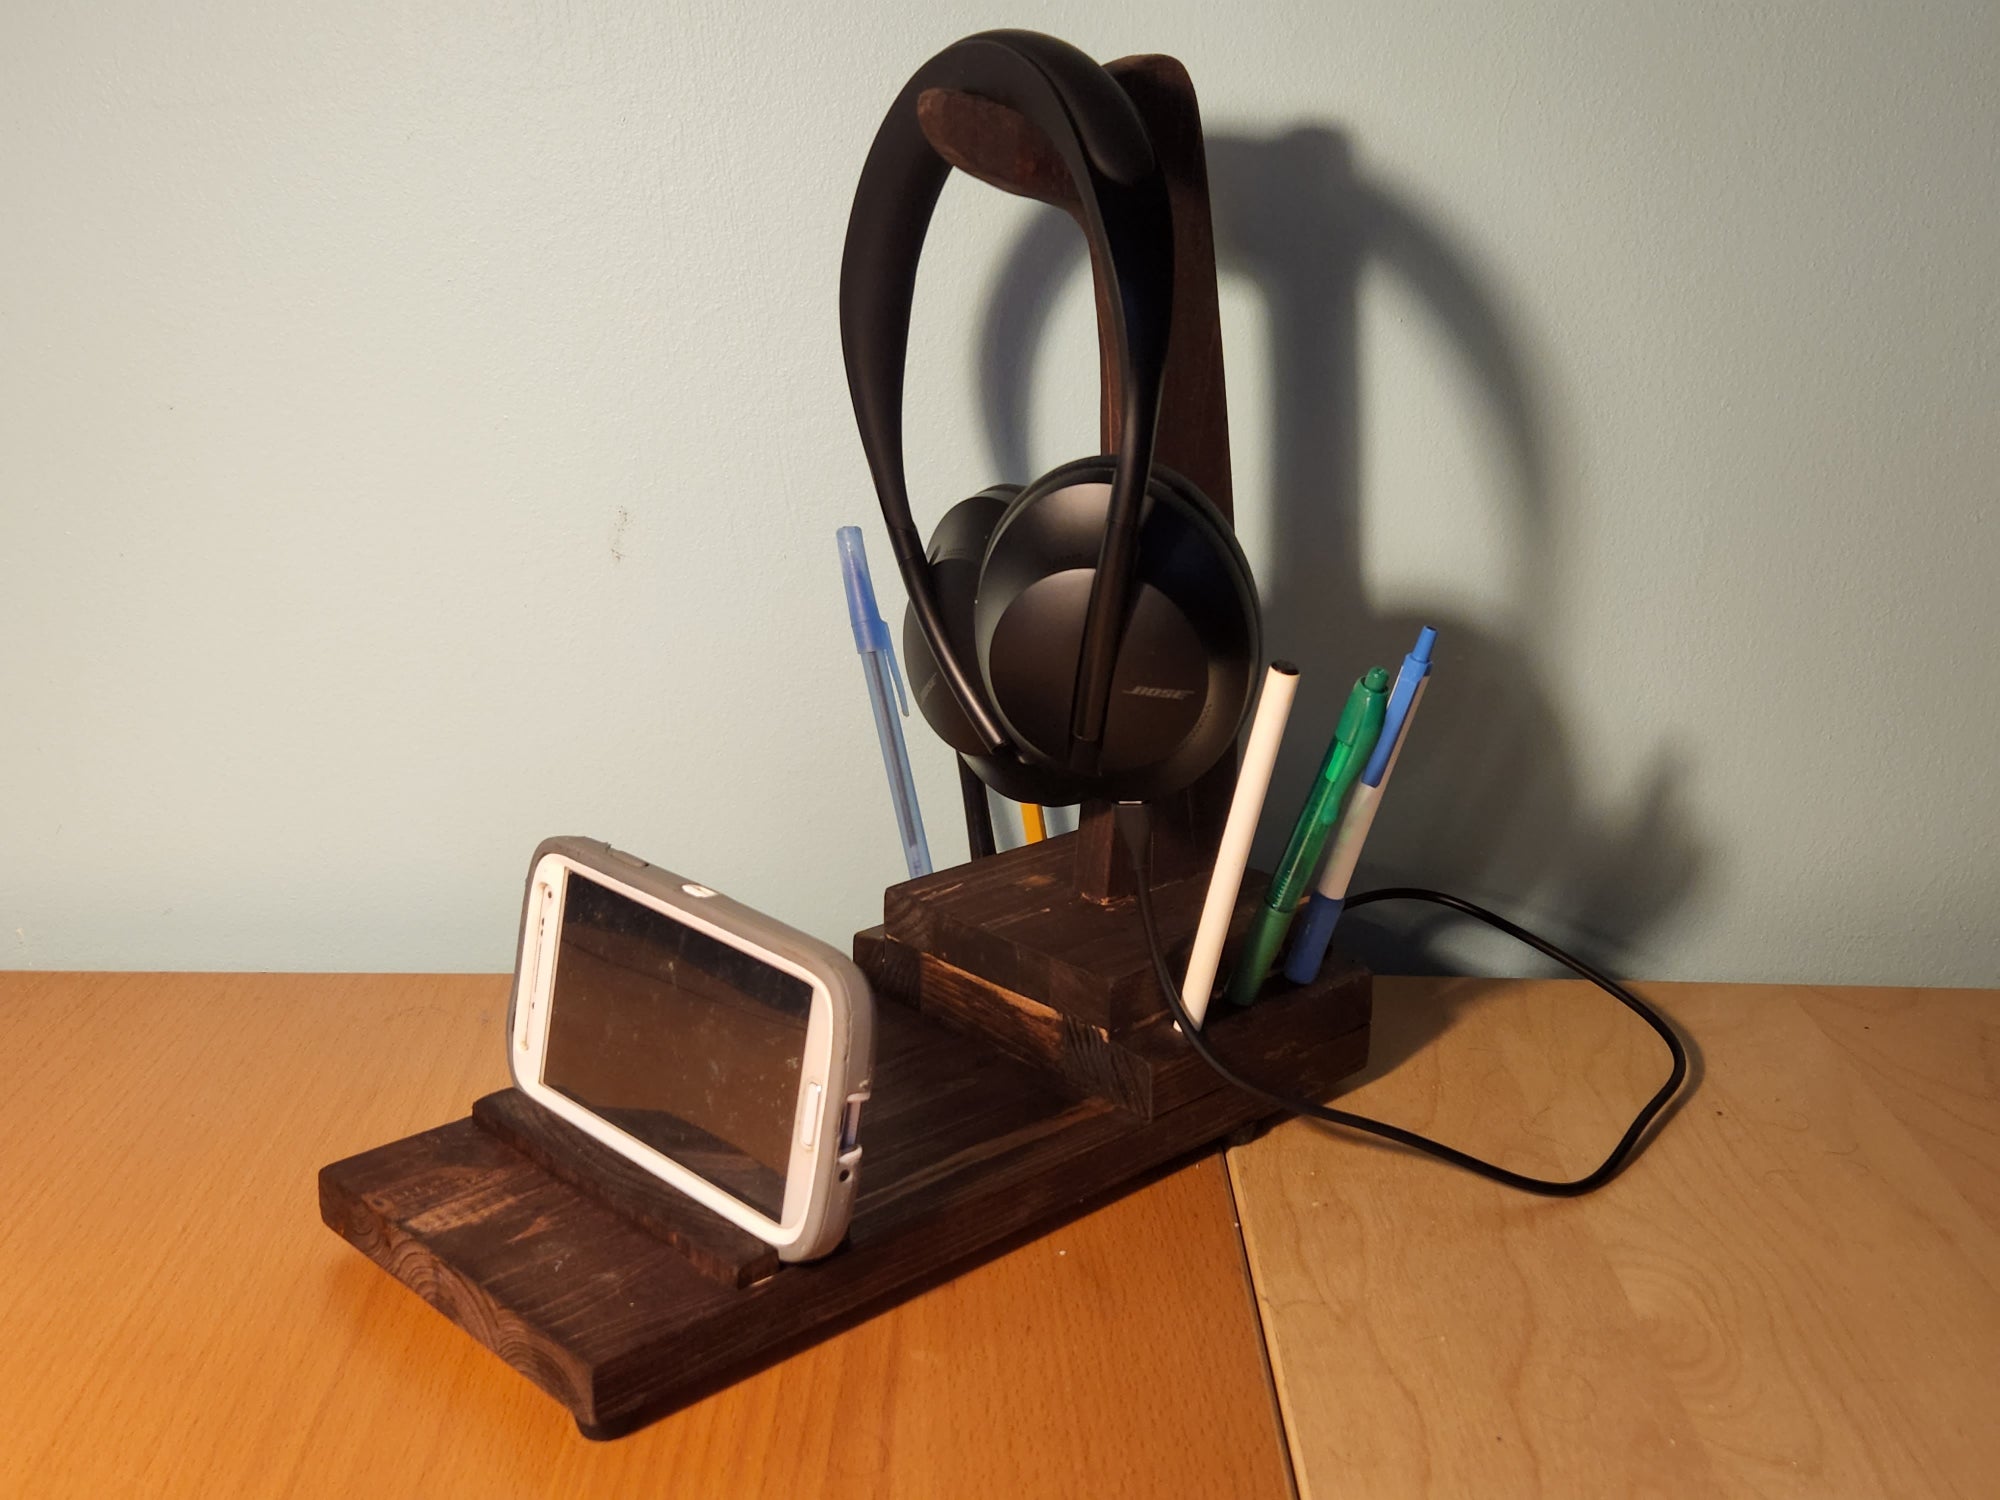 https://www.popsci.com/uploads/2022/08/21/DIY-Headphone-Stand.jpeg?auto=webp